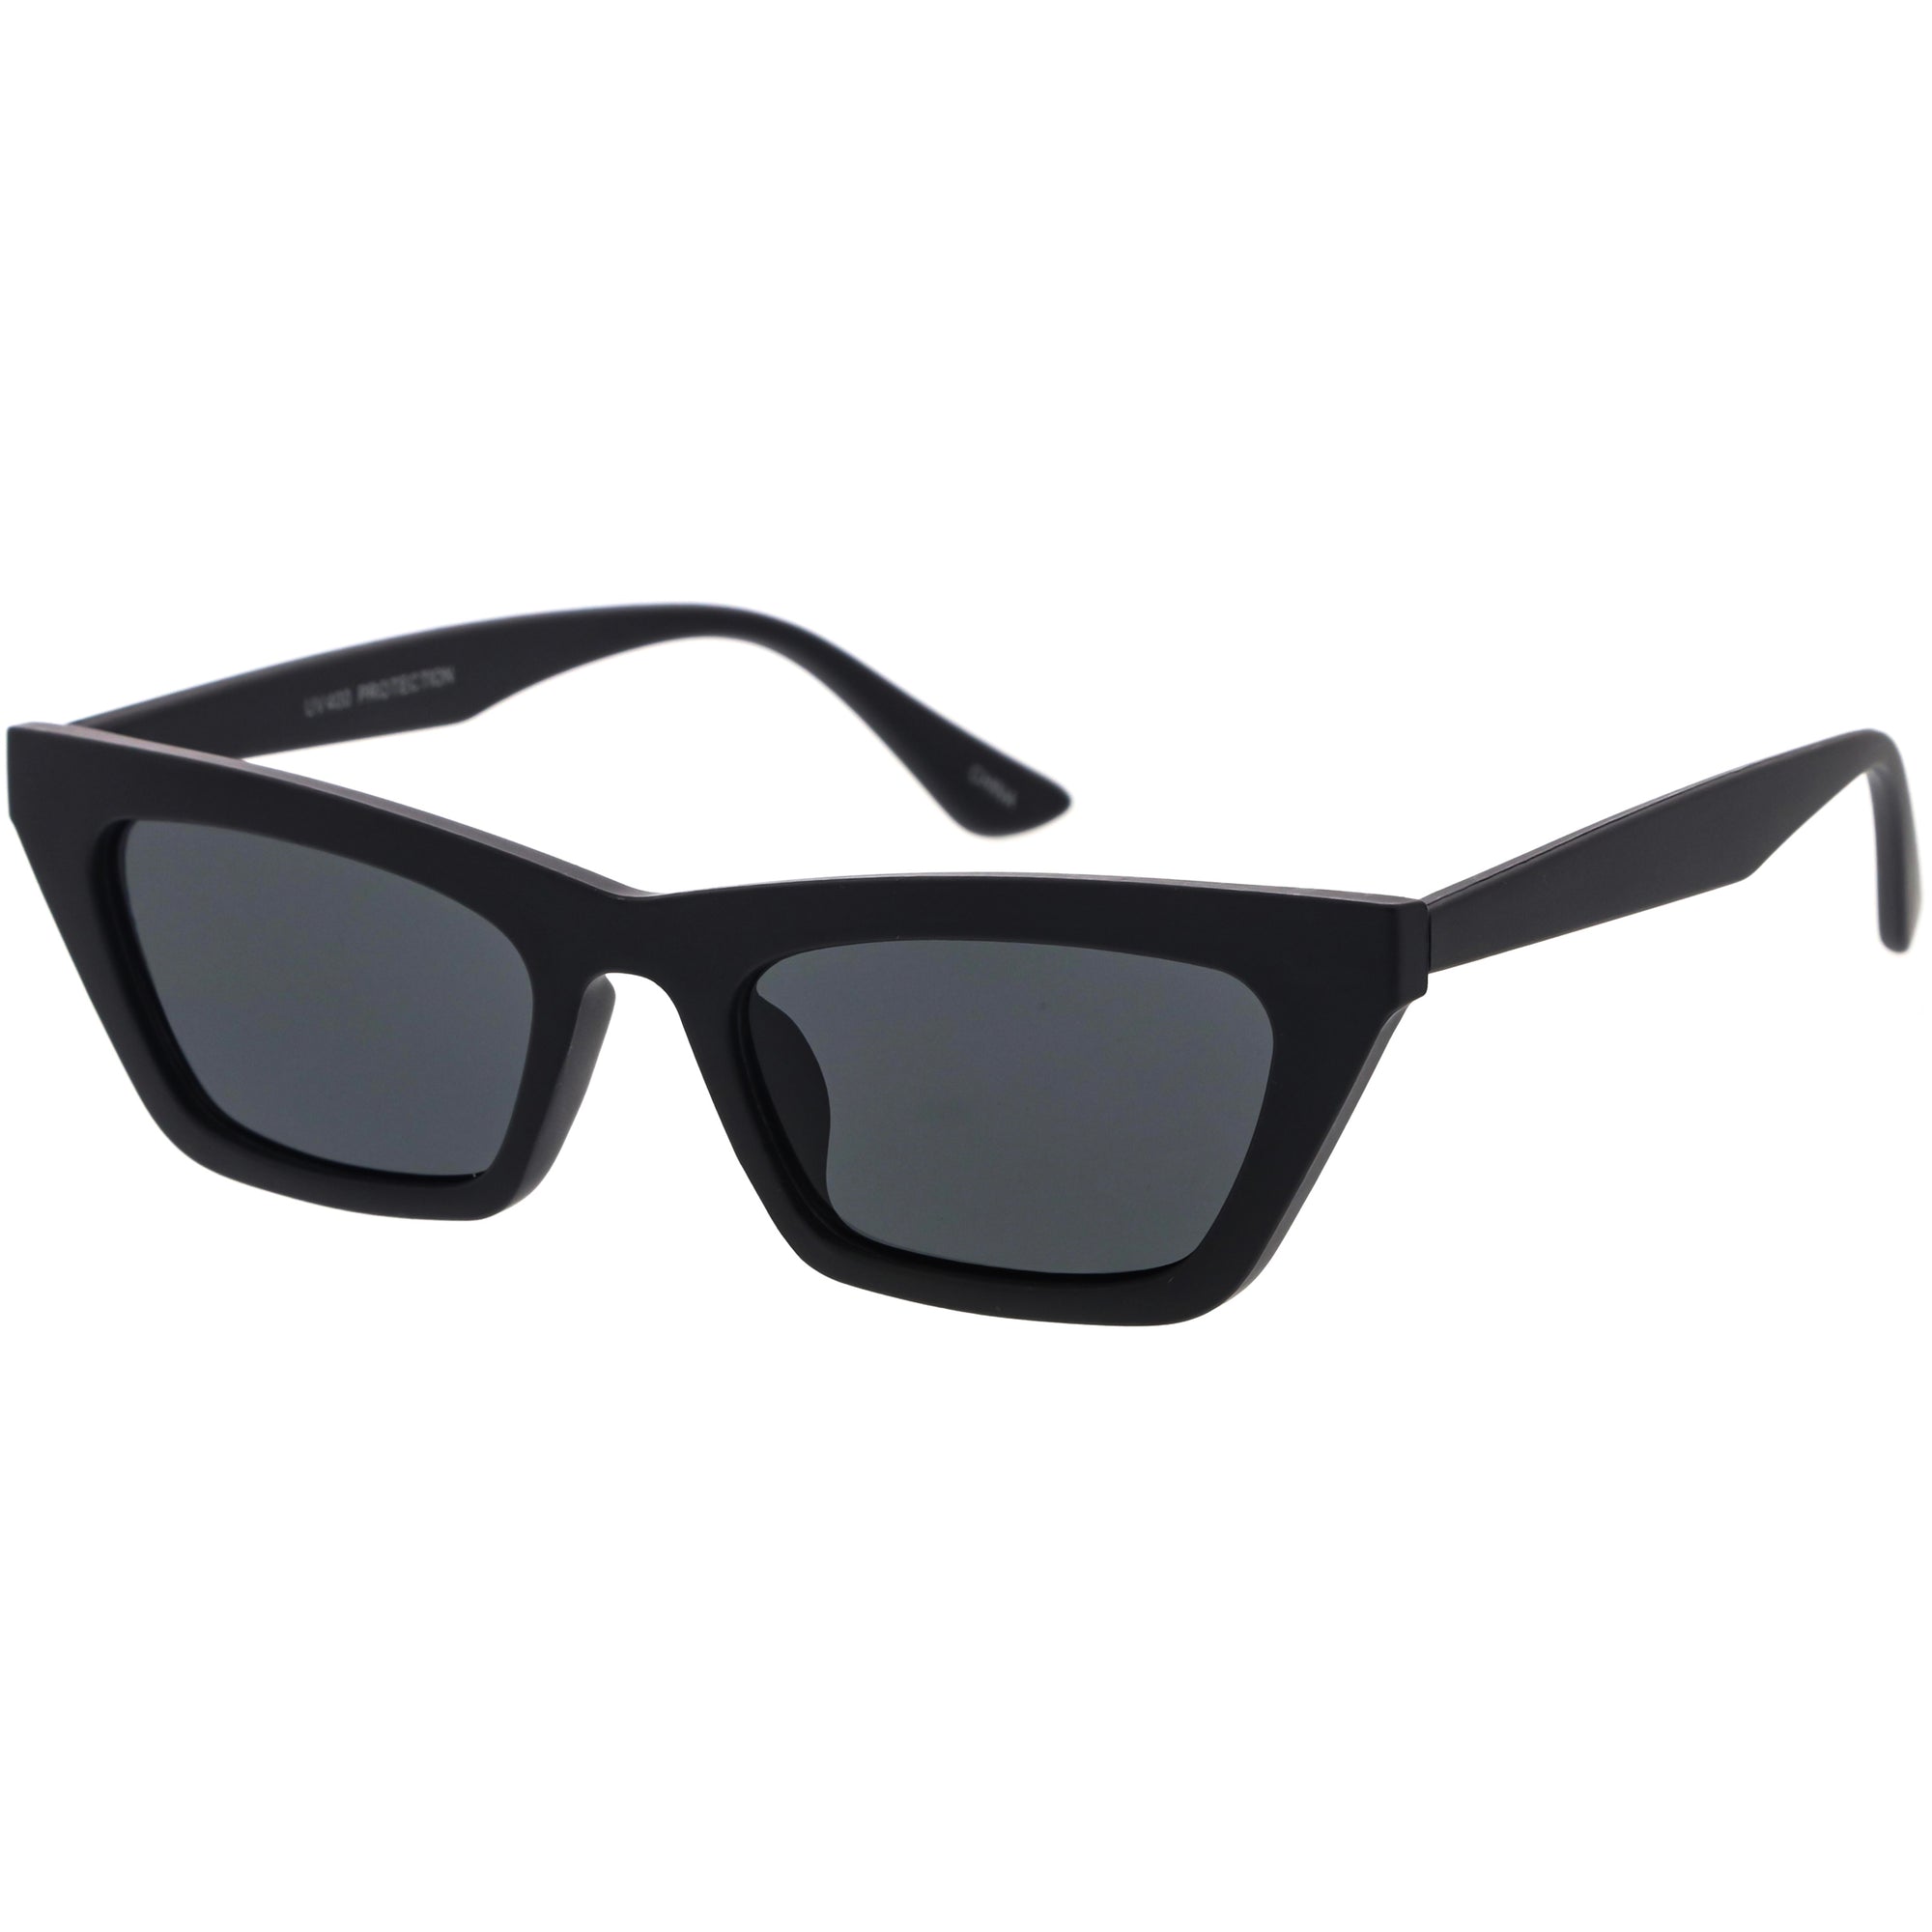 Mod Vintage Inspired Slim Pointed Cat Eye Sunglasses D211 - zeroUV